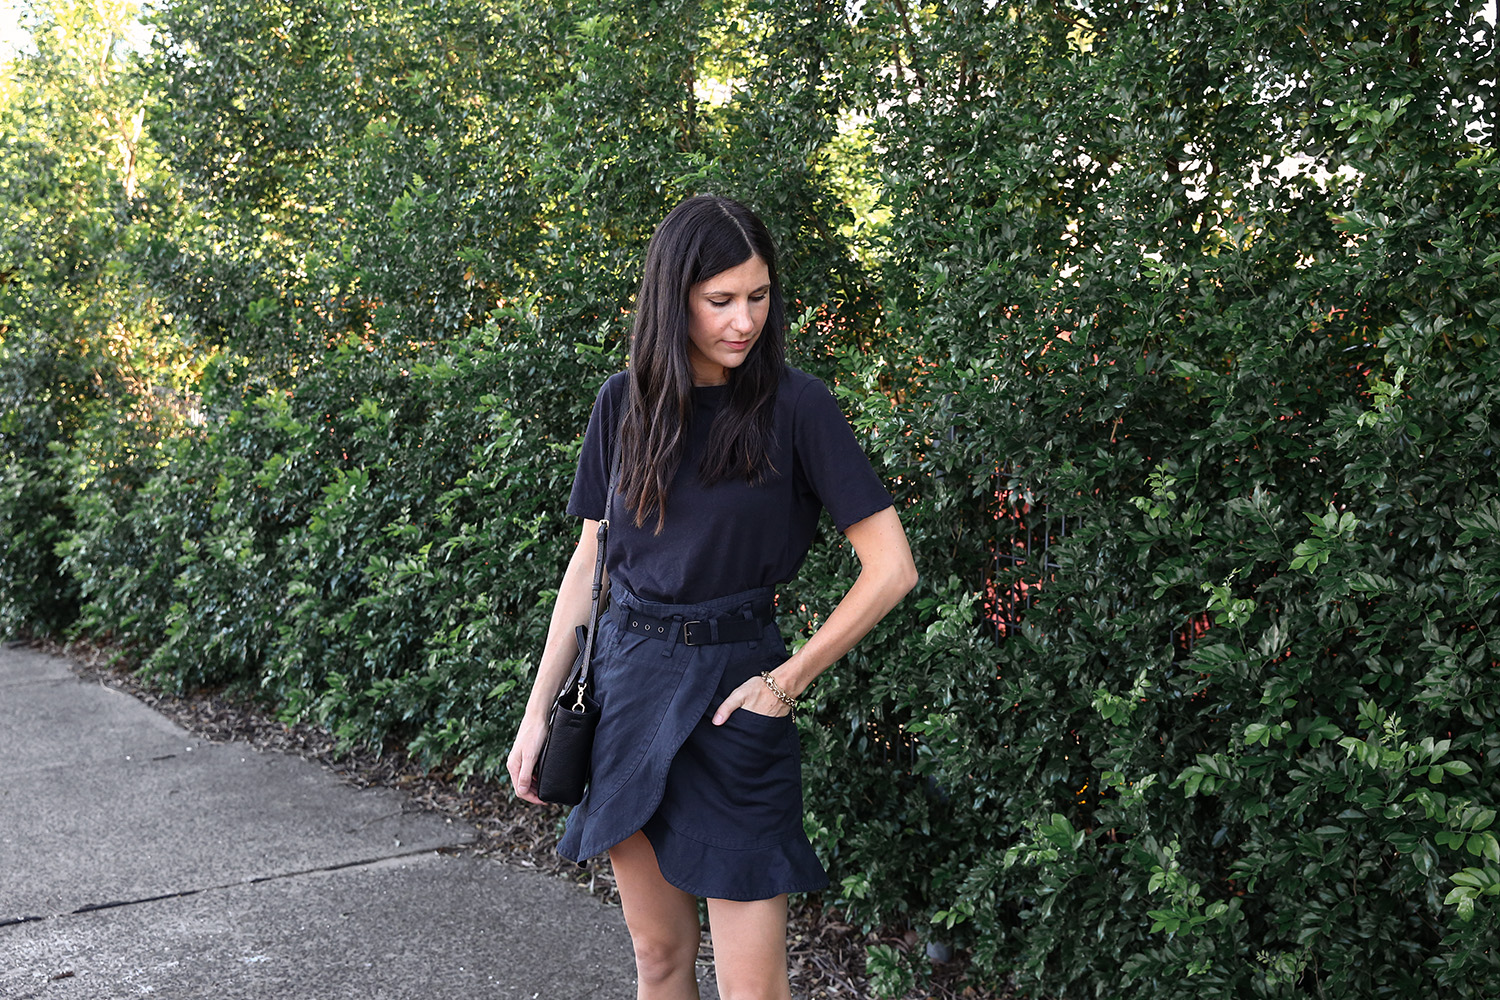 Jamie Lee of Mademoiselle wearing an Everlane black tee and Isabel Marant ruffled skirt